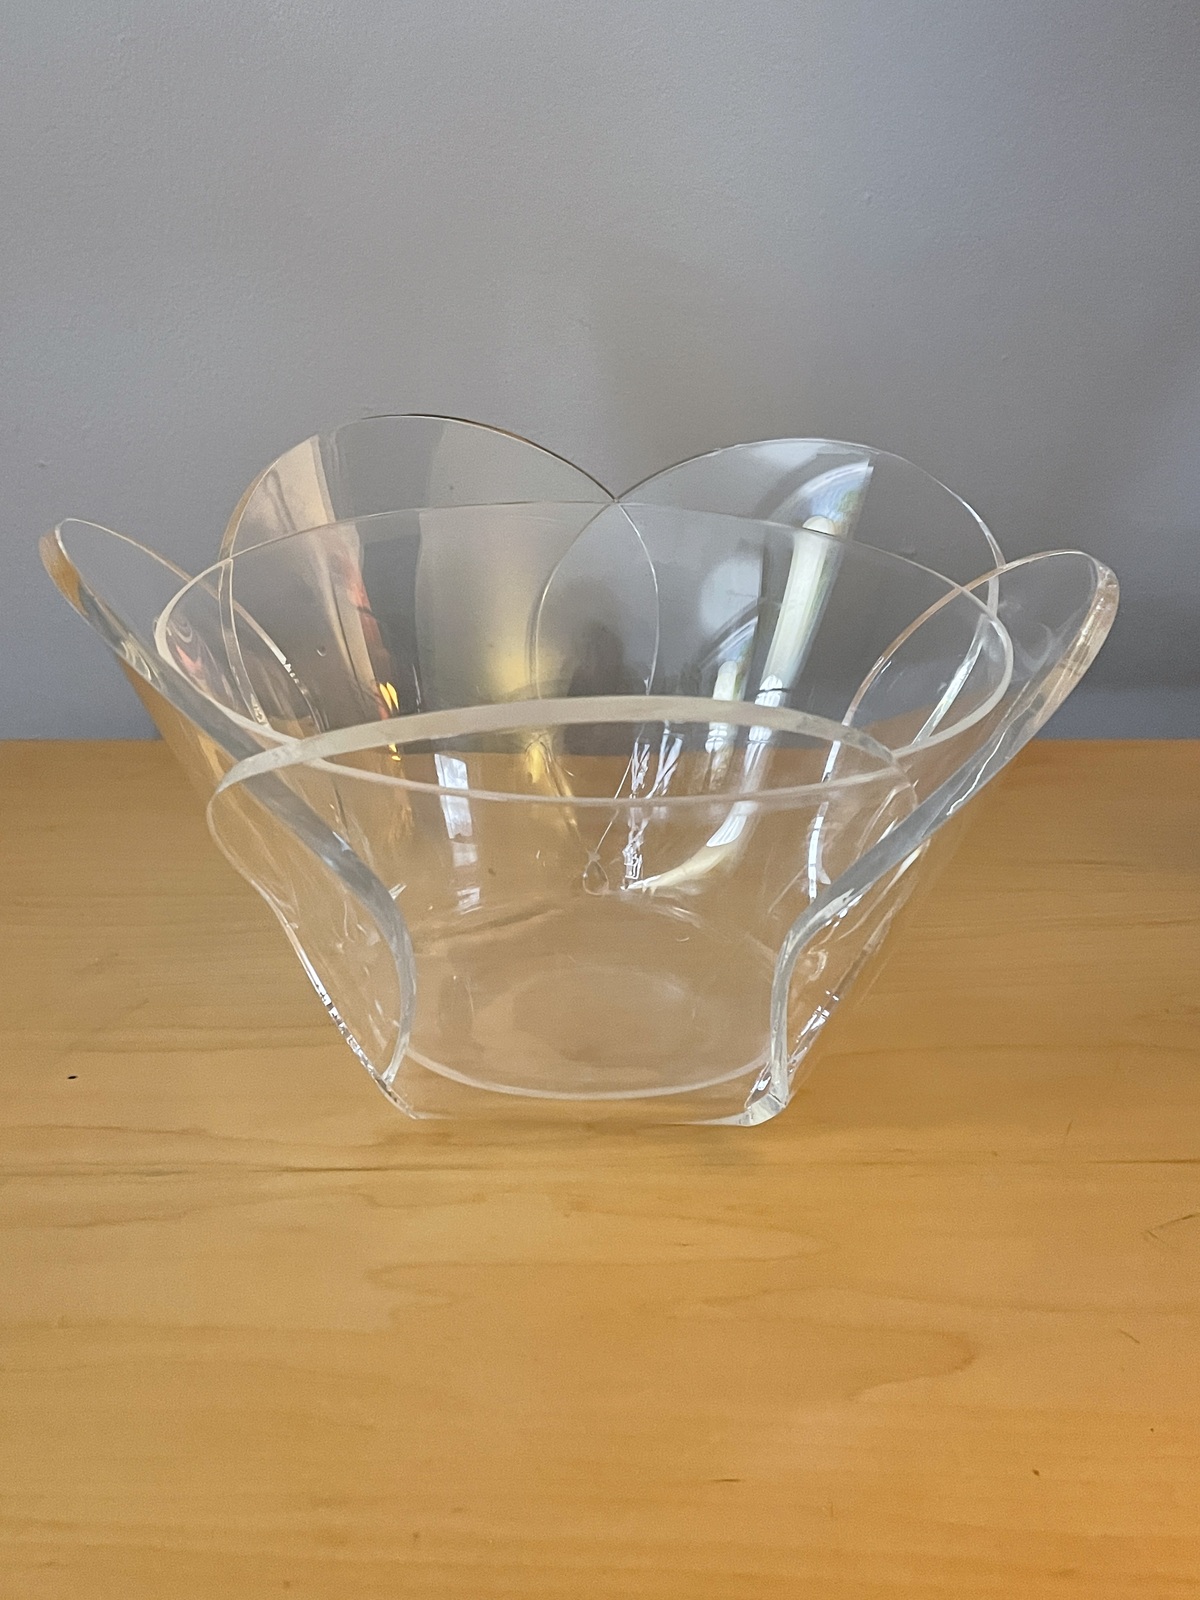 Primary image for Vintage 70s 2-part Lucite "petal" ice bowl set